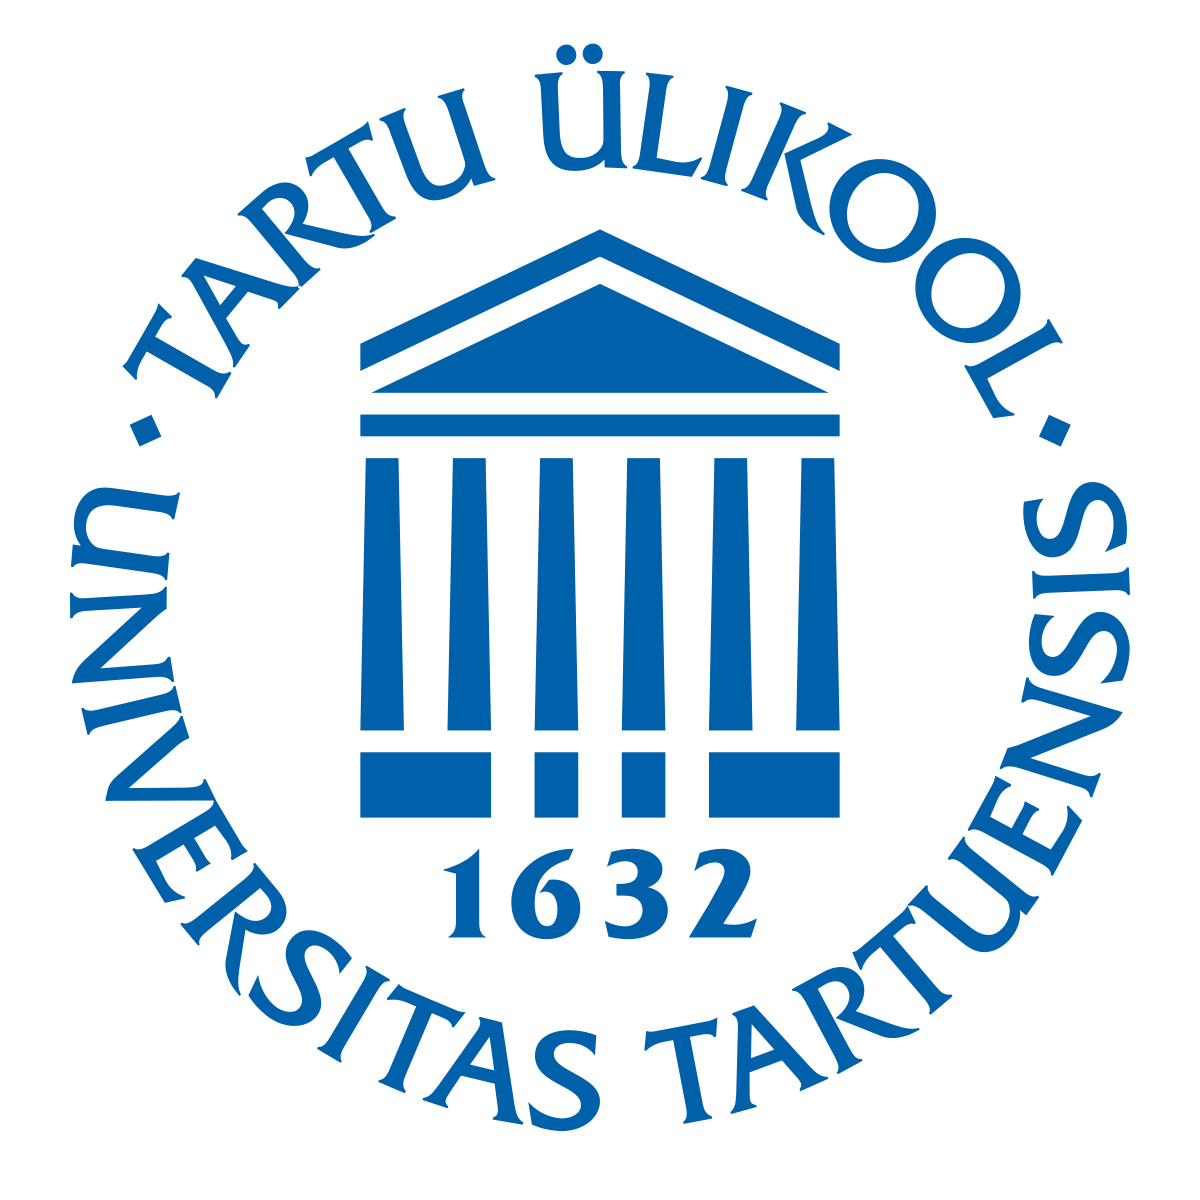 https://2021.biotoopia.ee/wp-content/uploads/2021/06/University-of-Tartu-Estonia.png